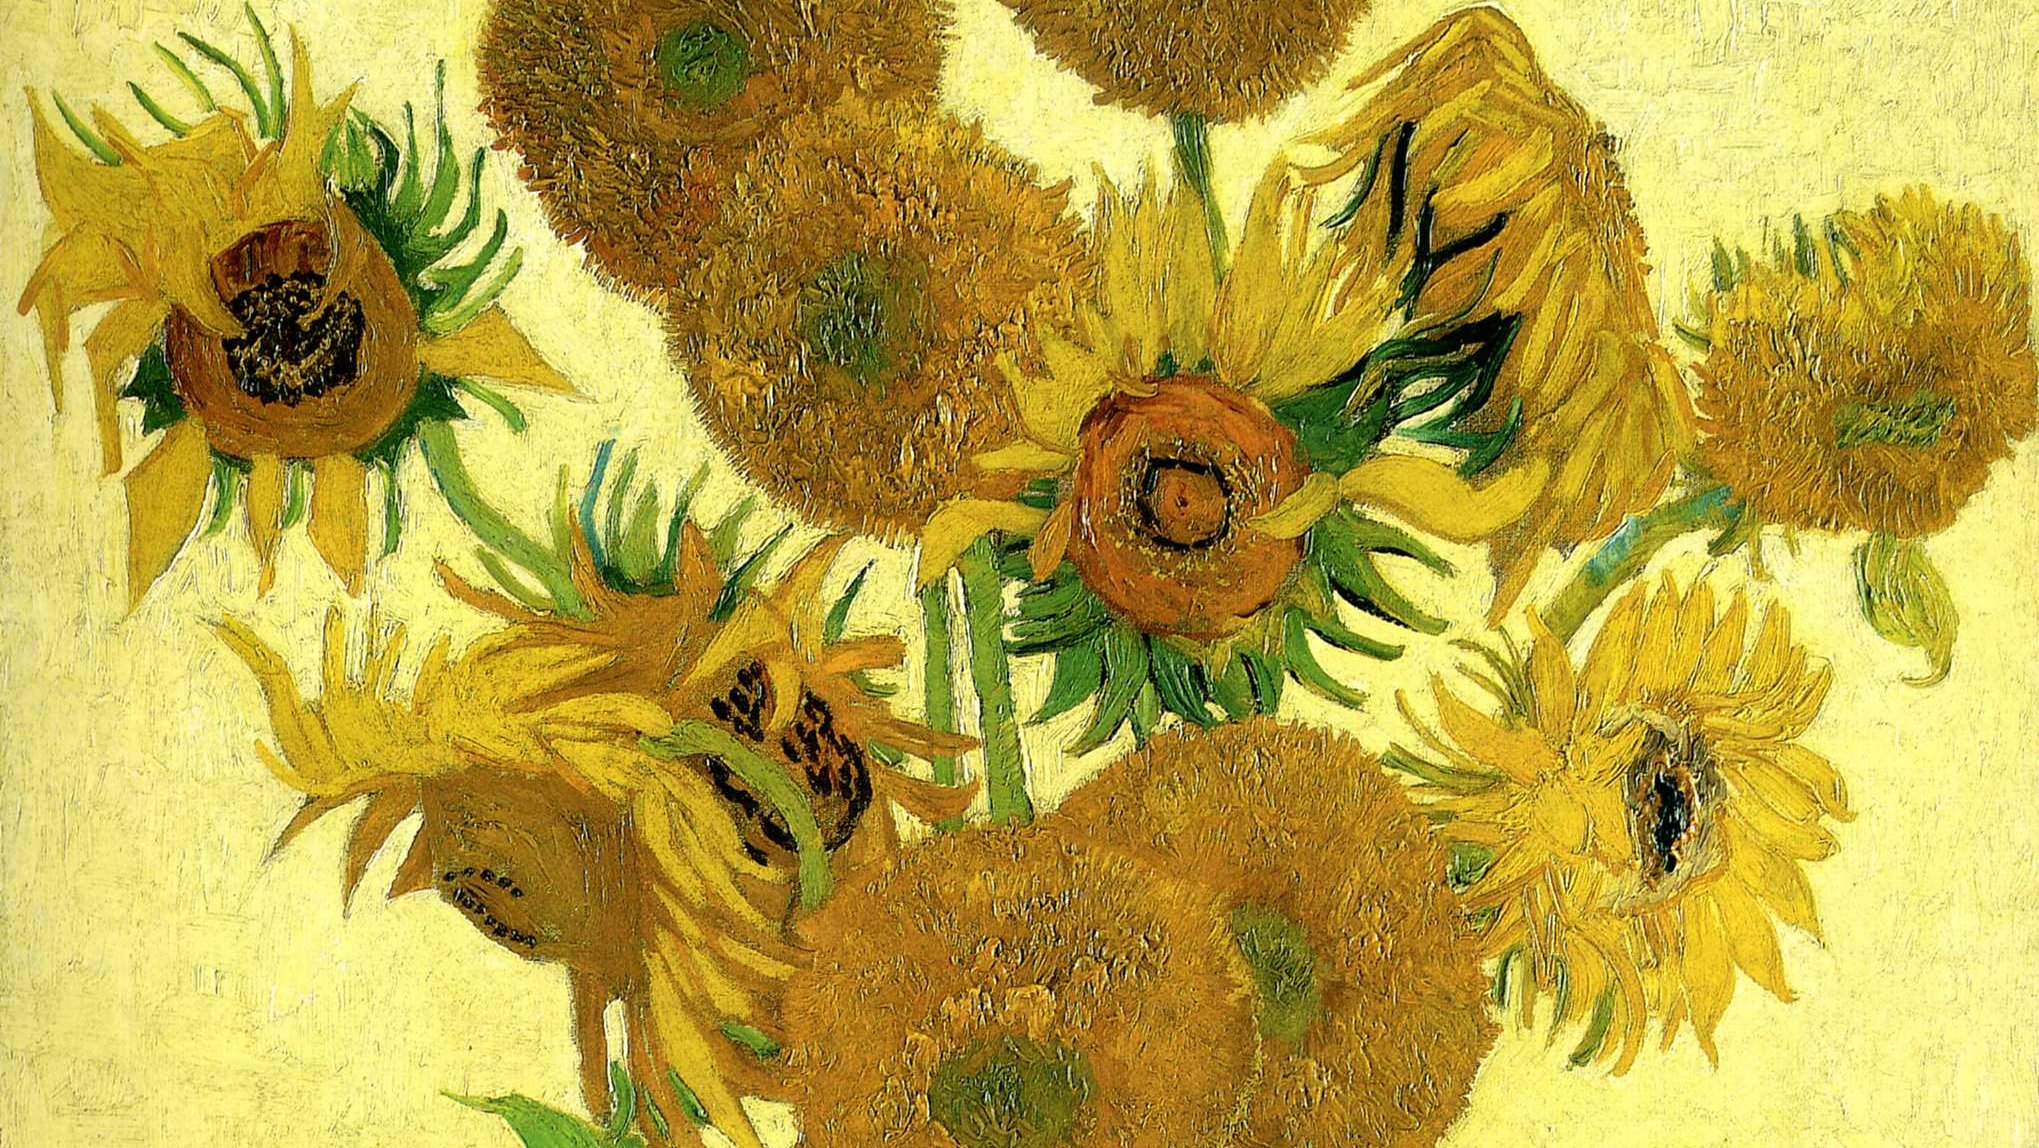 1987: Van Gogh’s Sunflowers Sold for over $39 Million